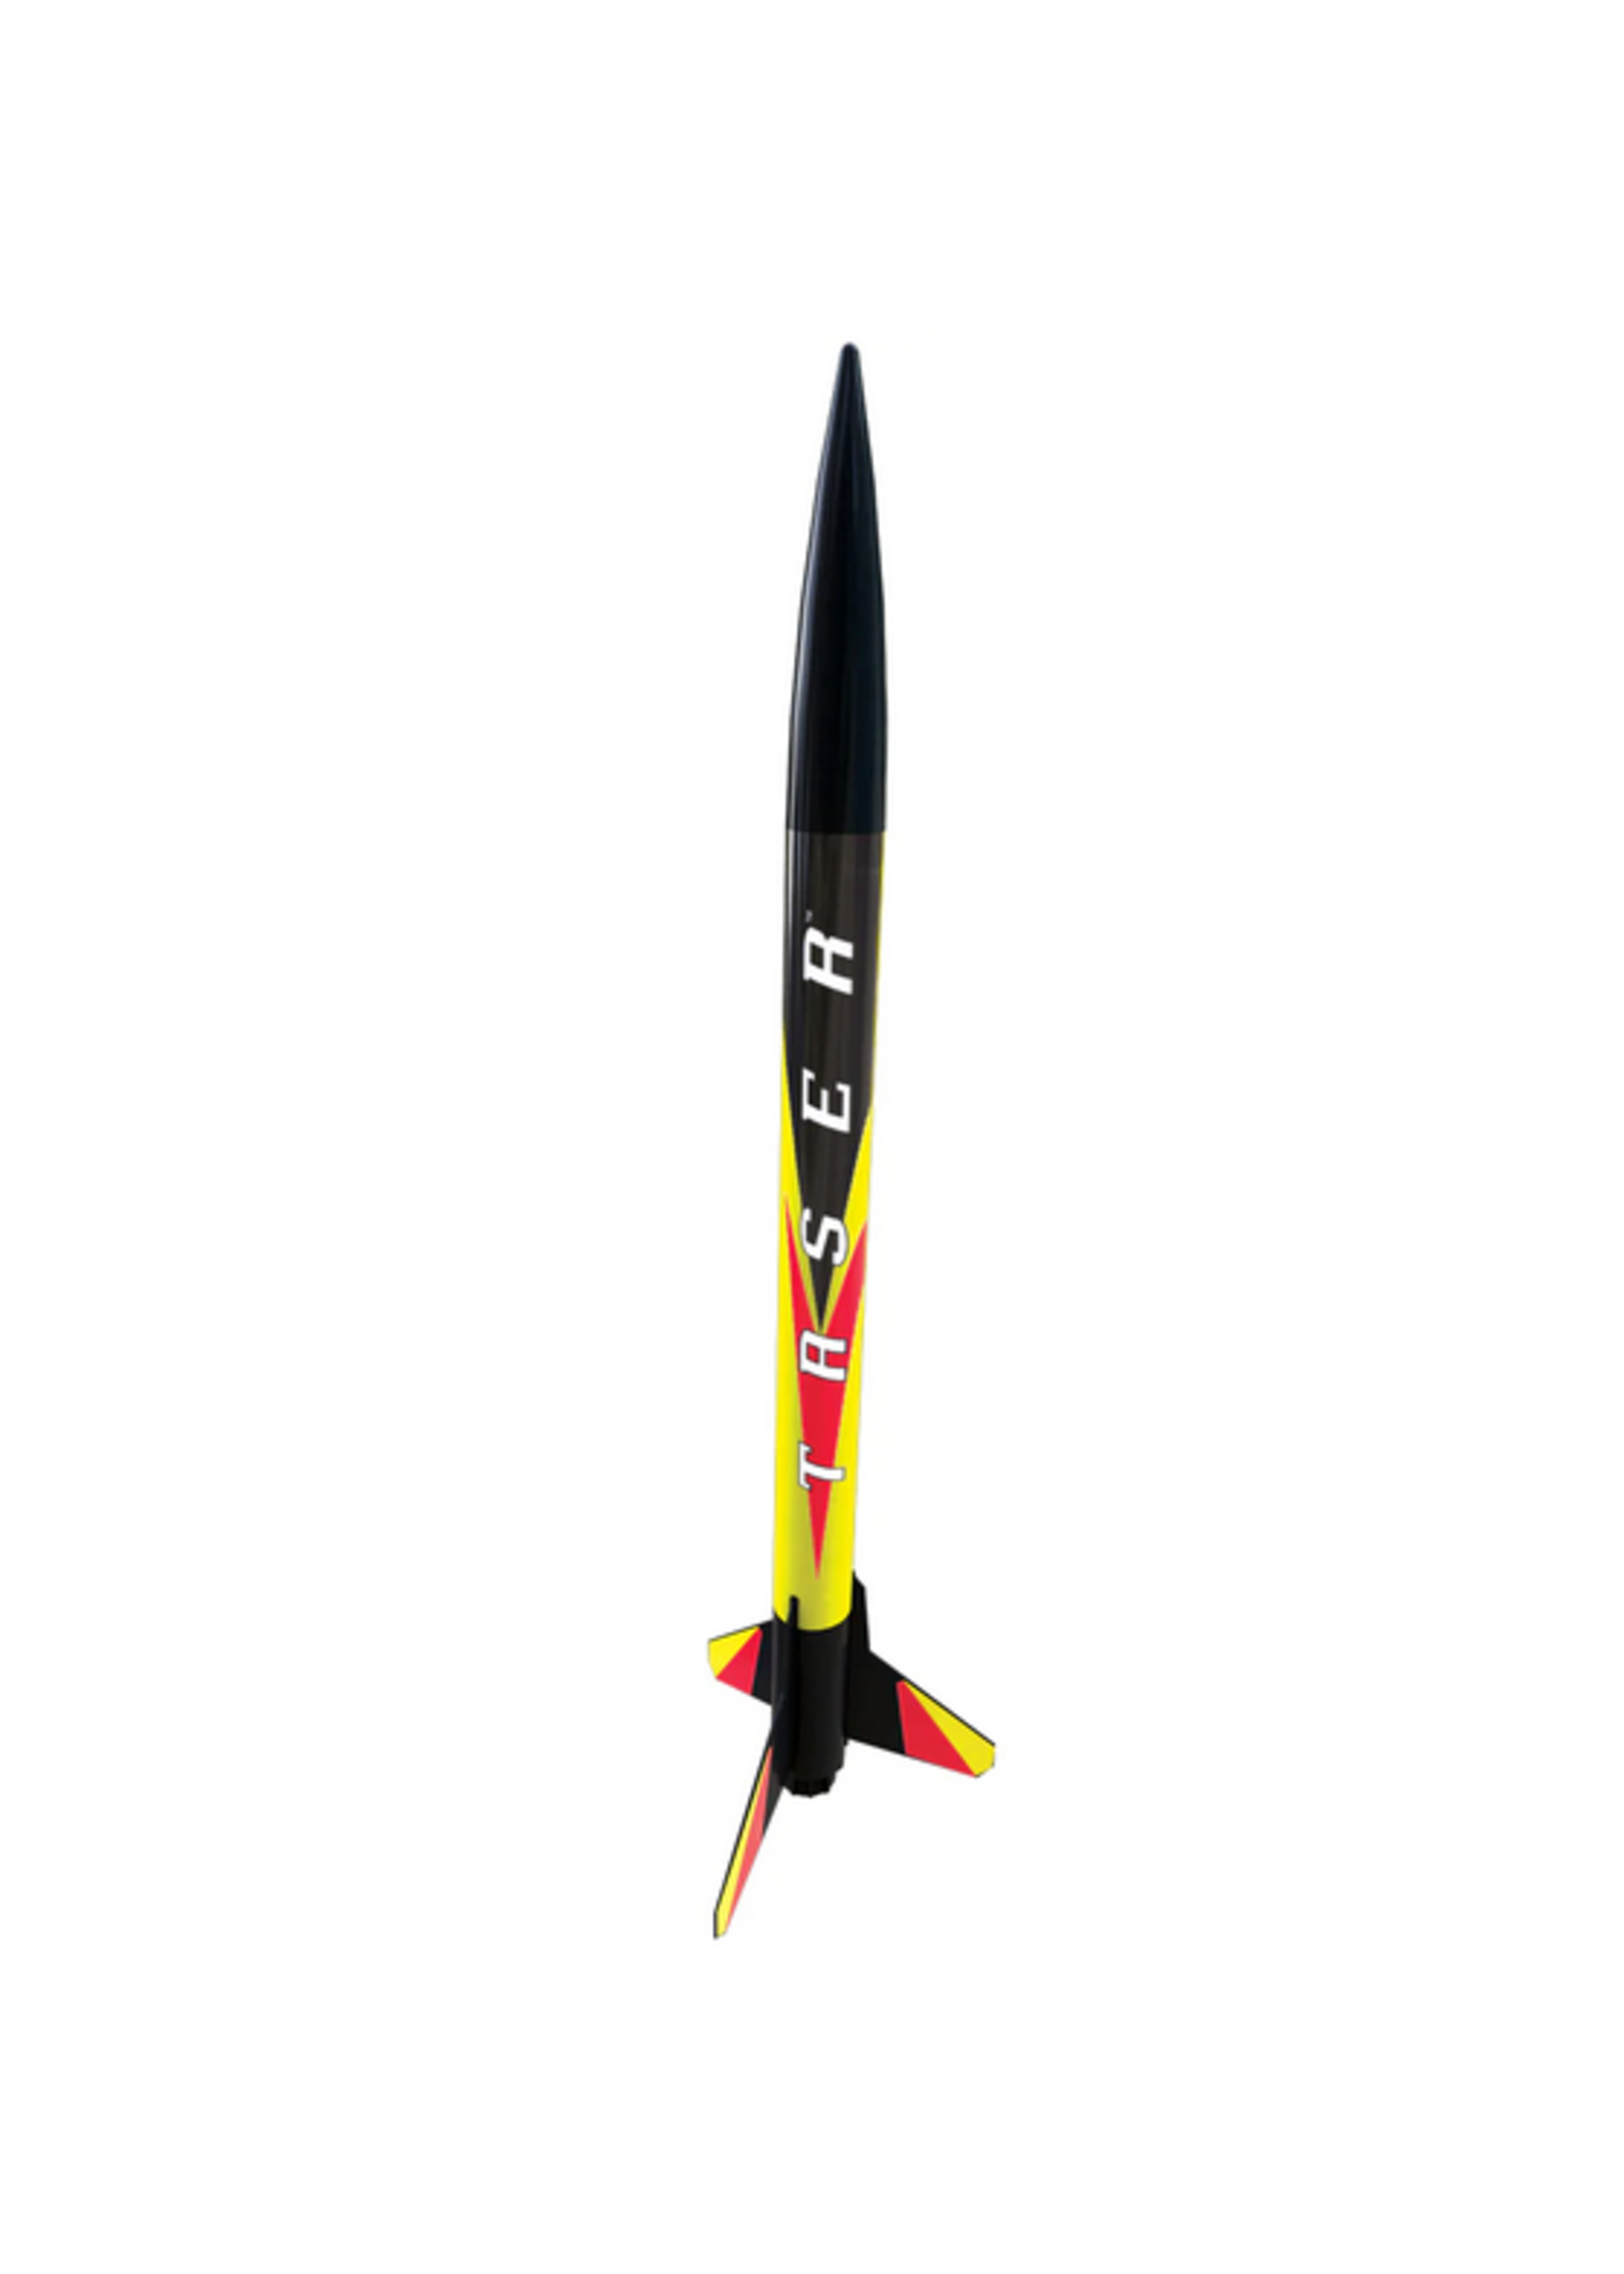 Estes EST1491 Estes Taser Rocket Launch Set, E2X